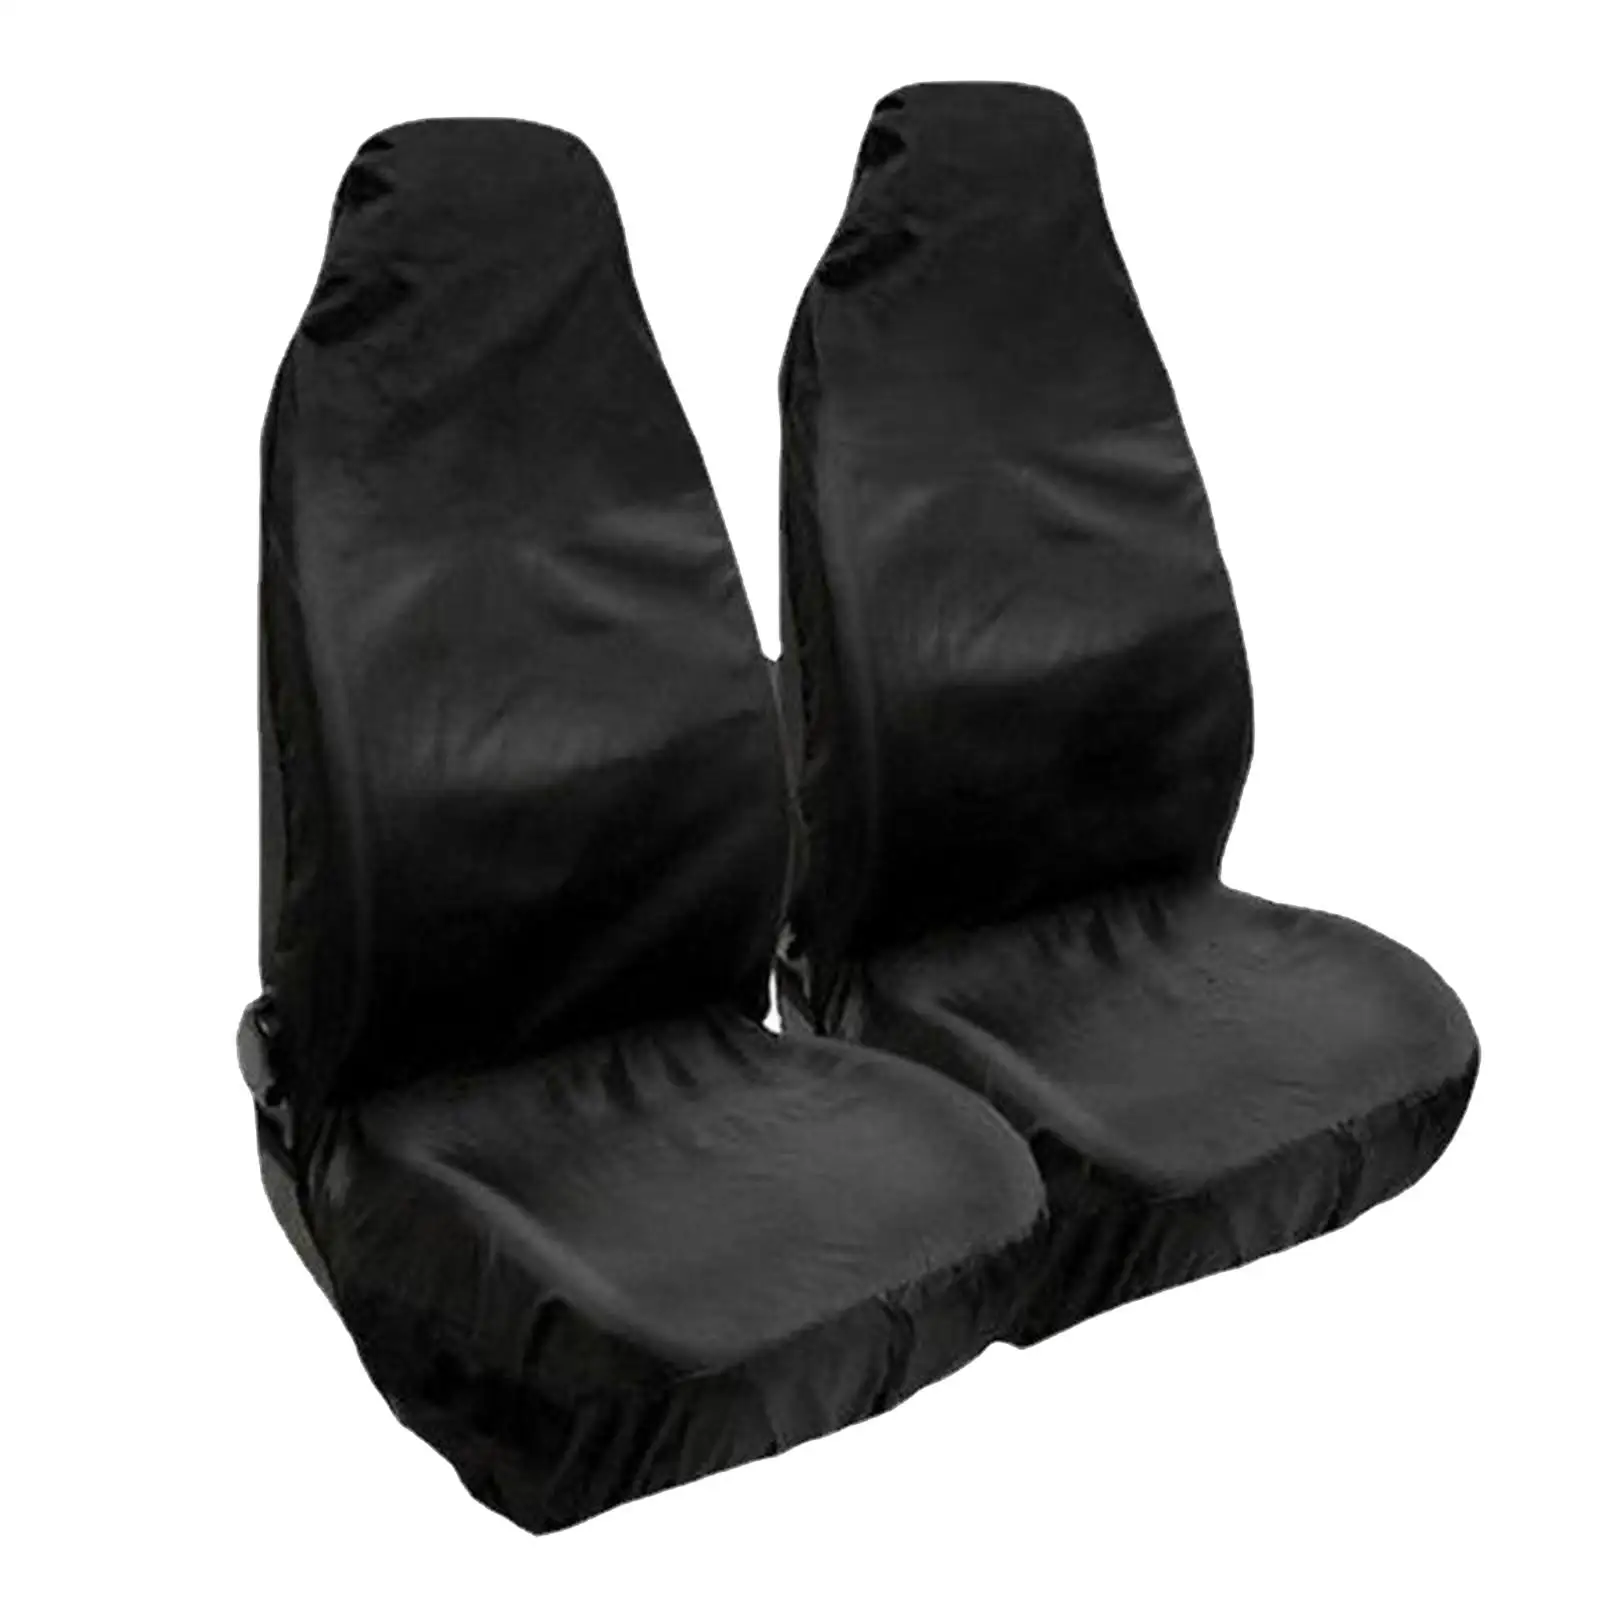 2x אוטומטי כיסוי מושב סט כרית מושב מכסים עם שקית אחסון Dustproof קל להגנה כיסוי מושב מגן עבור רכב שטח - 5